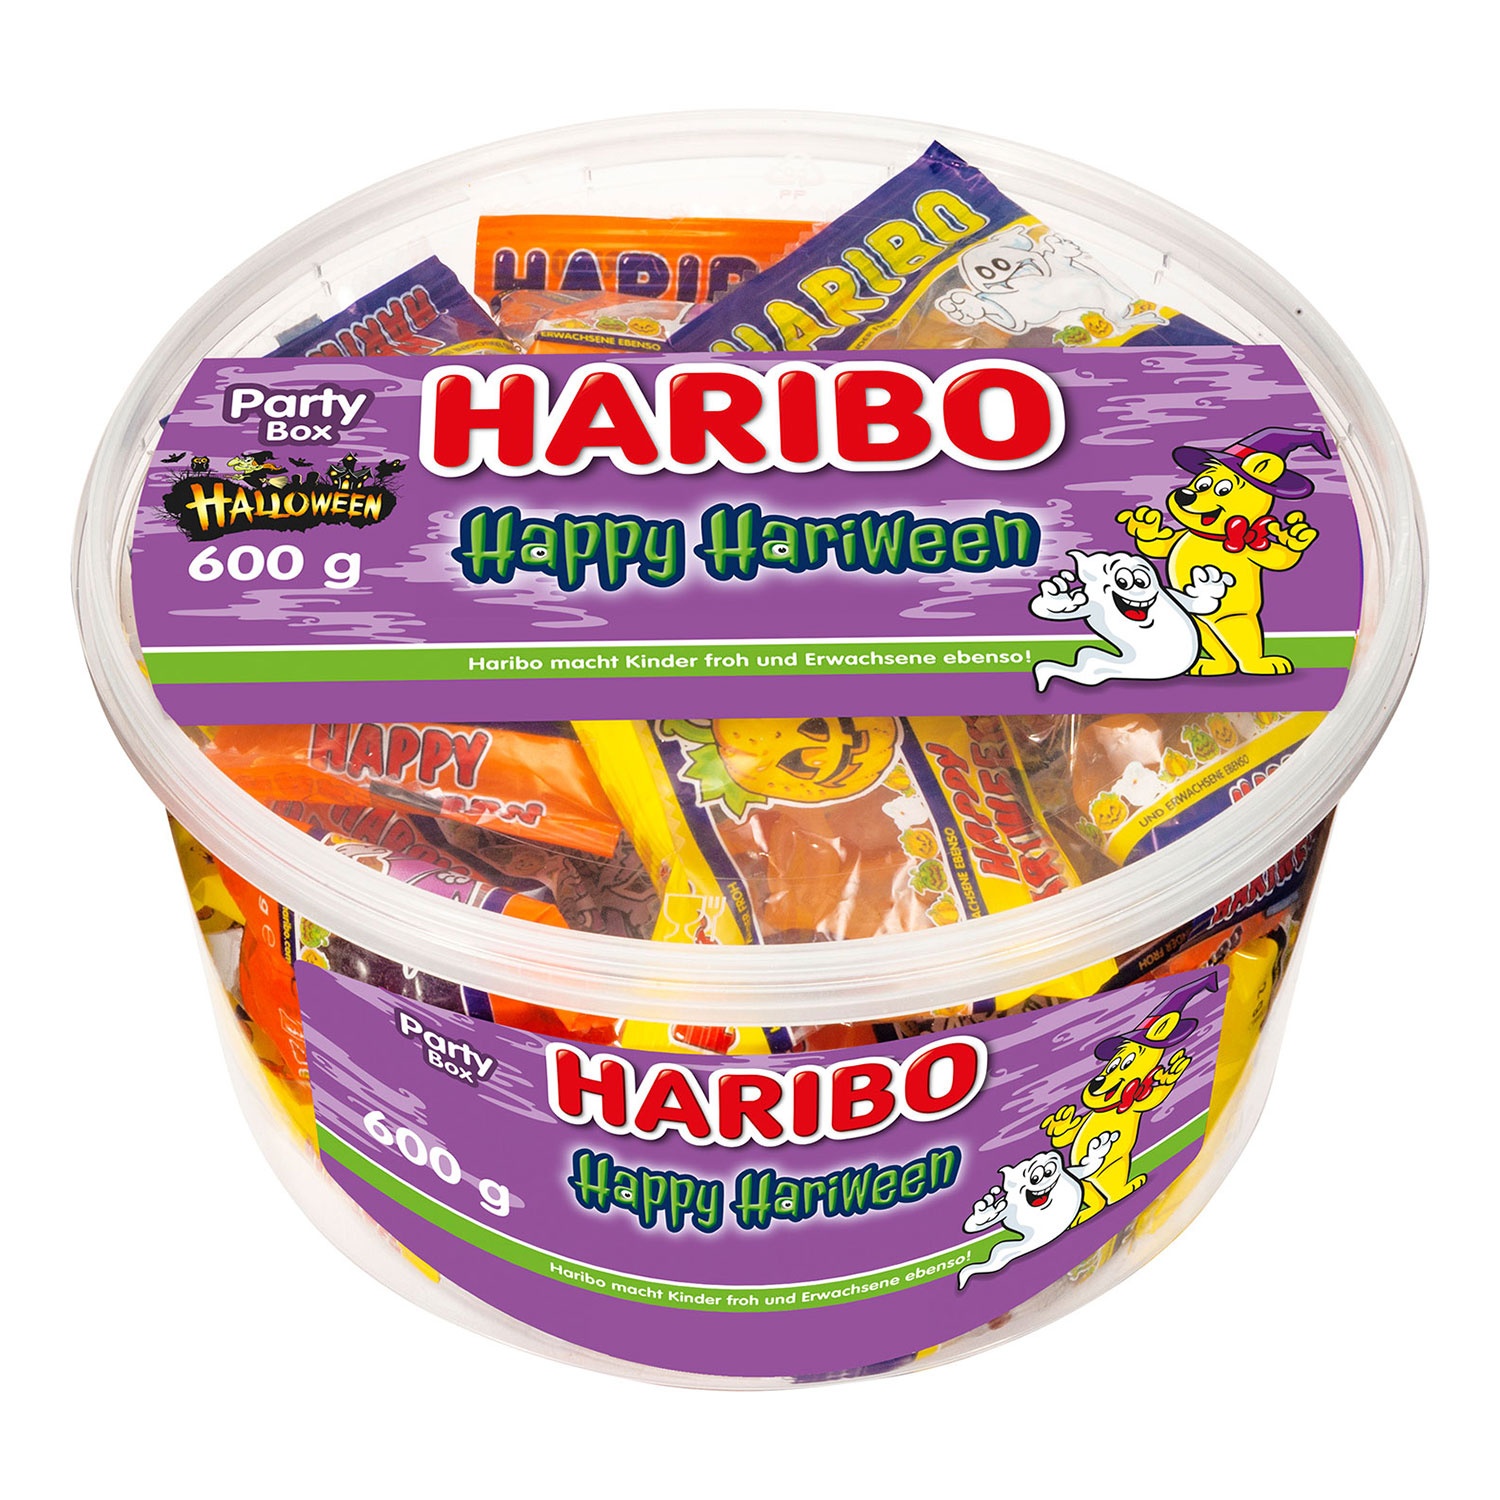 HARIBO Happy Hariween 600 g